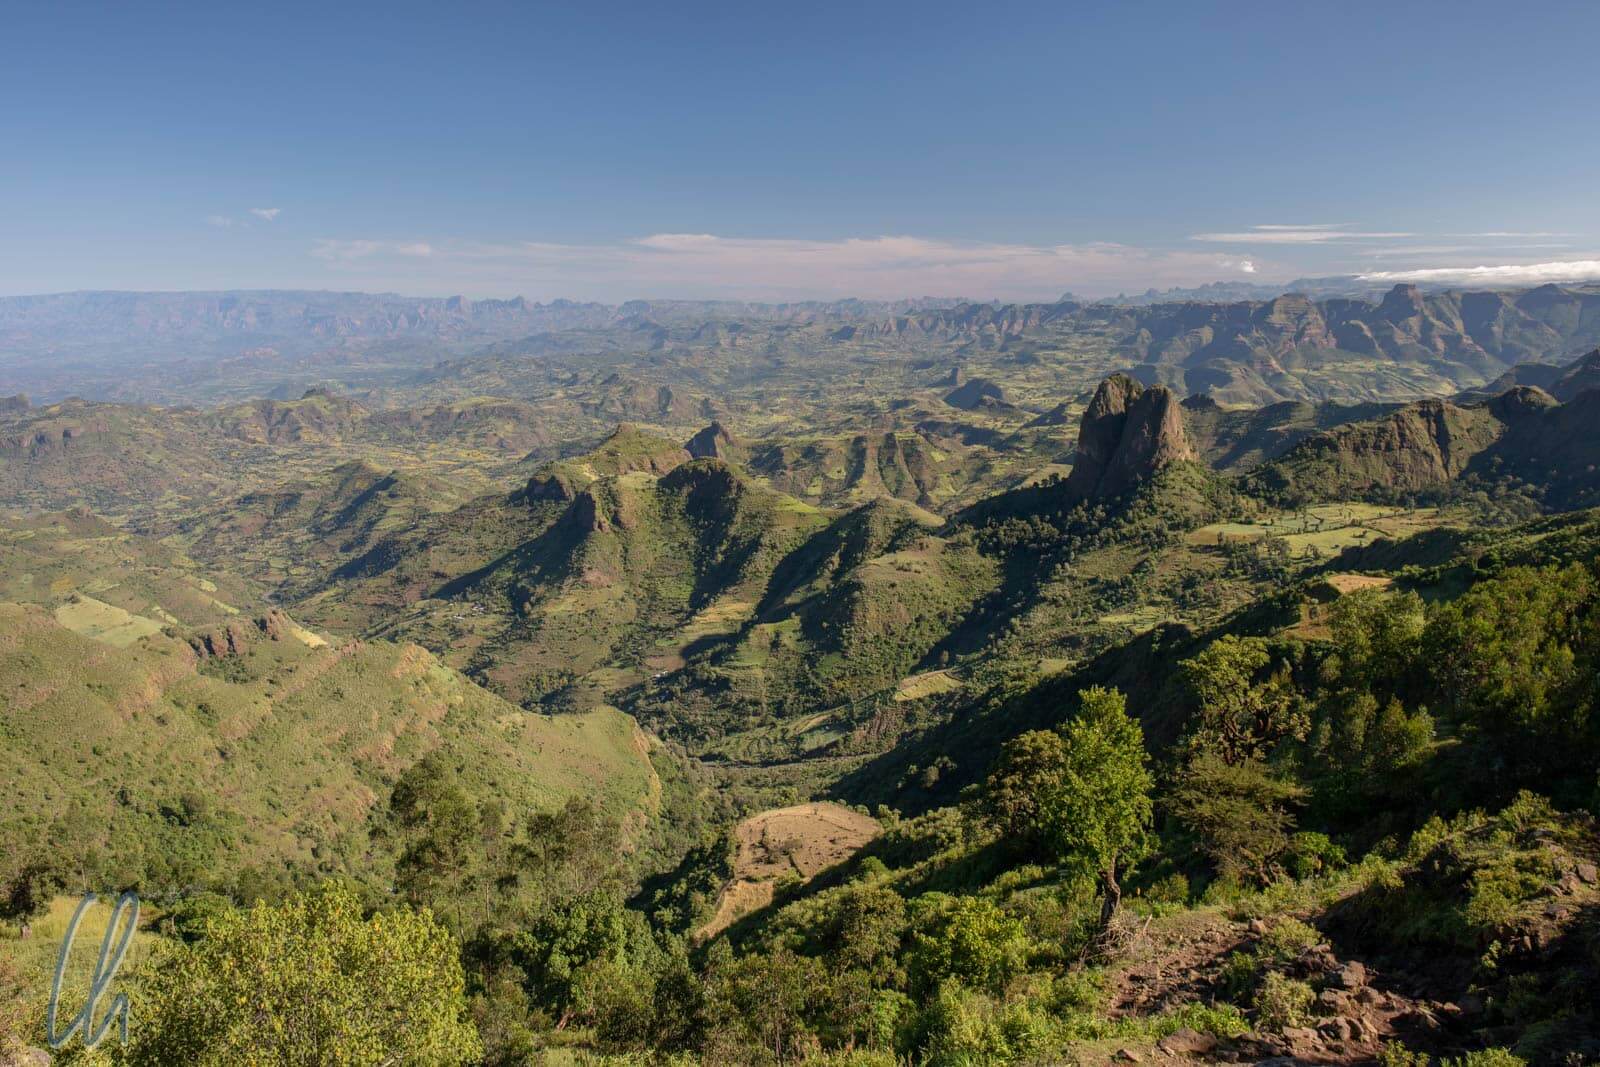 Breathtaking view from Ethiopia's mountain top.